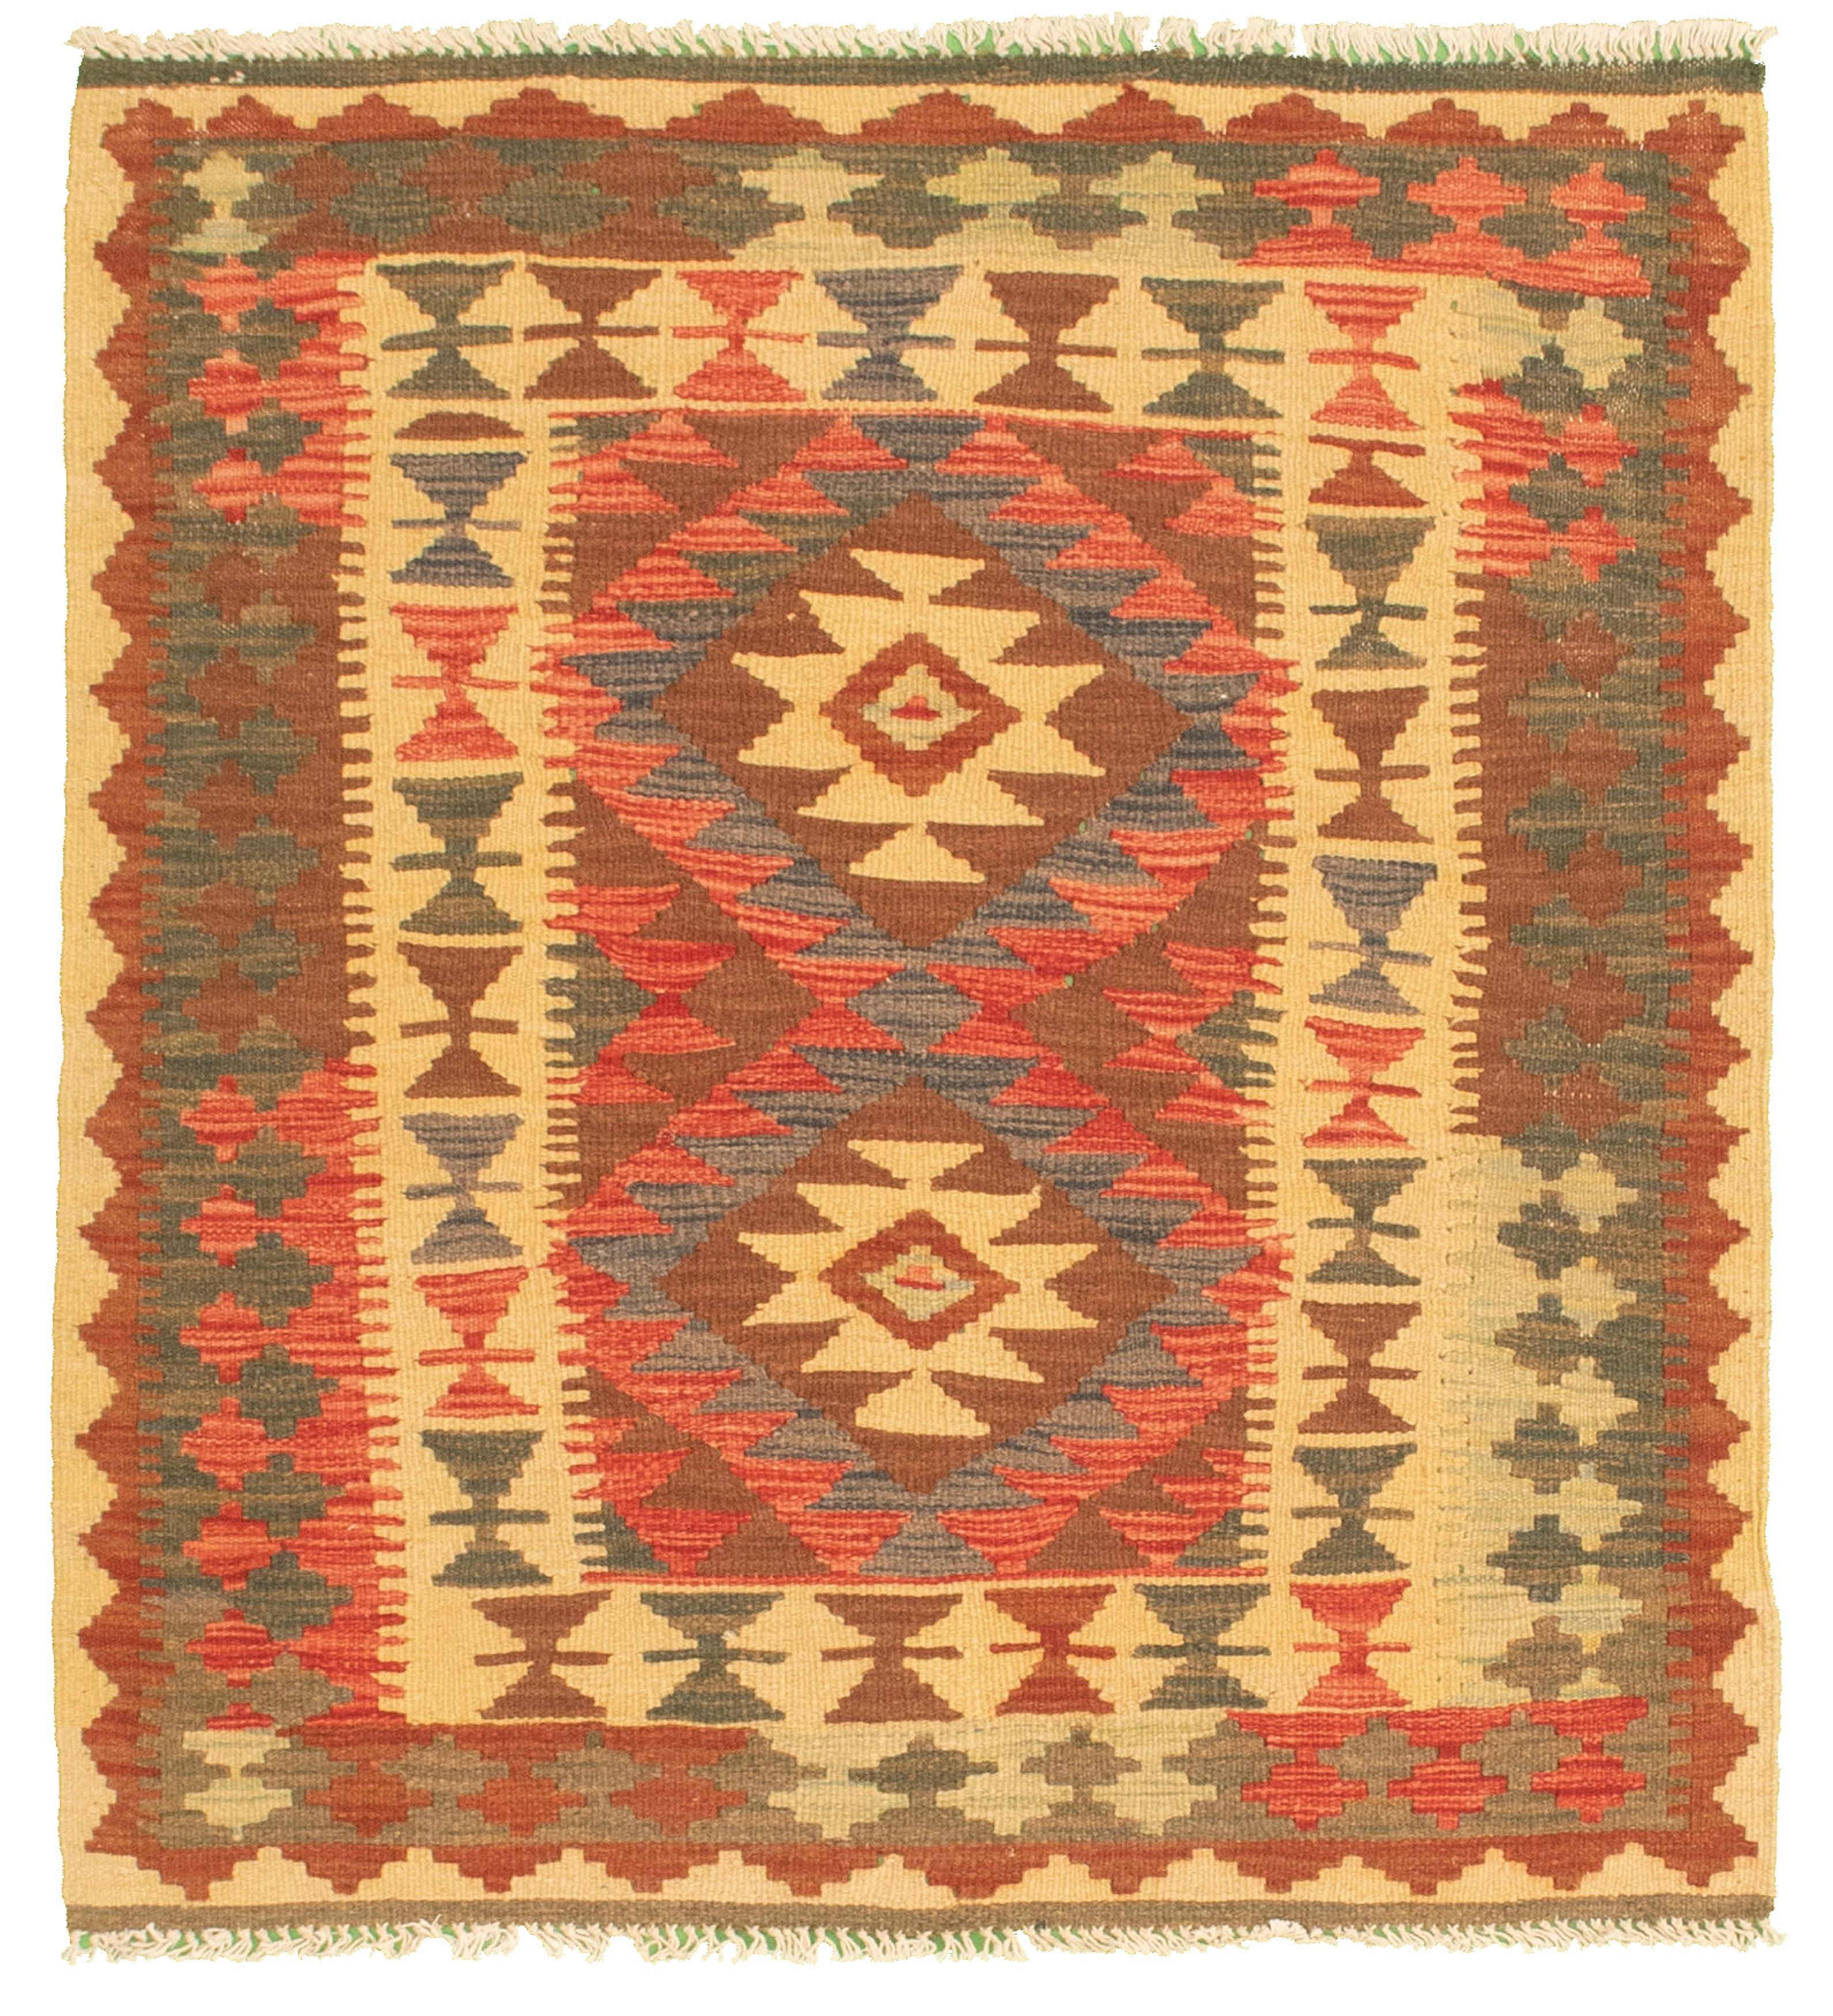 Geometric handwoven colorful afghan kilim rug tribal Turkish kilim